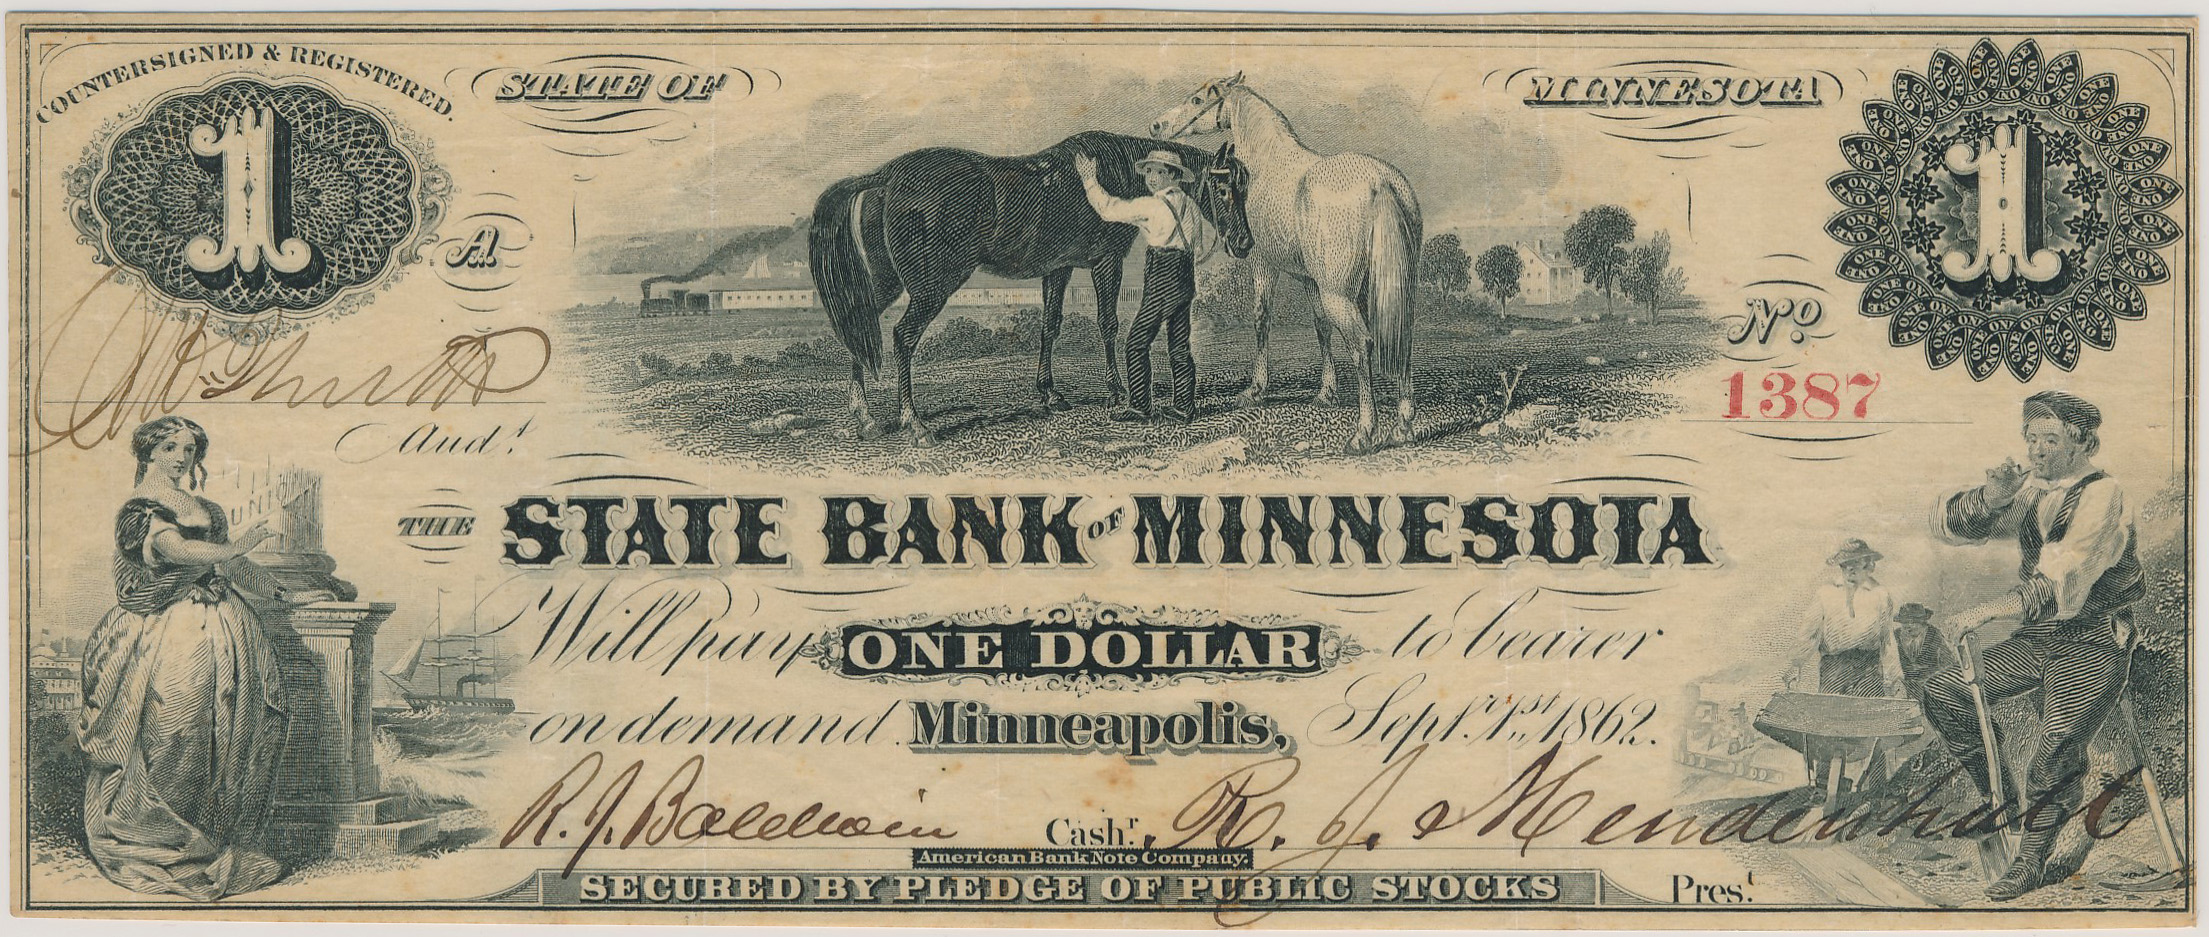 $1 State Bank of Minnesota - Minneapolis